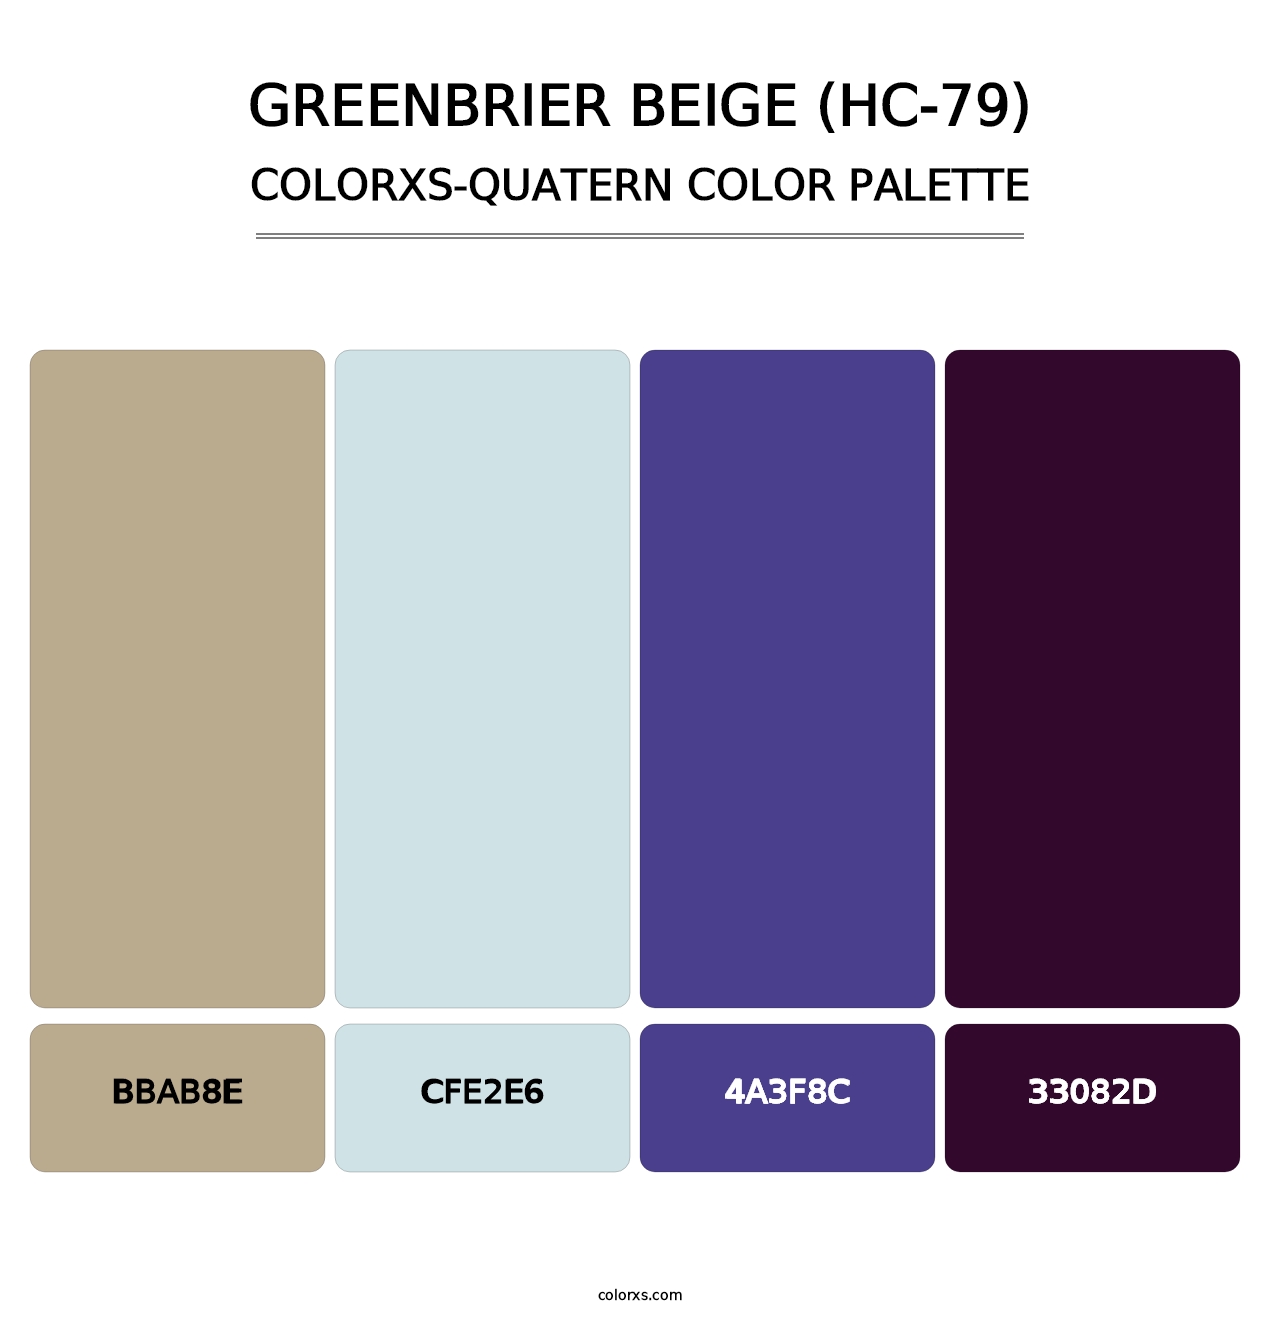 Greenbrier Beige (HC-79) - Colorxs Quatern Palette